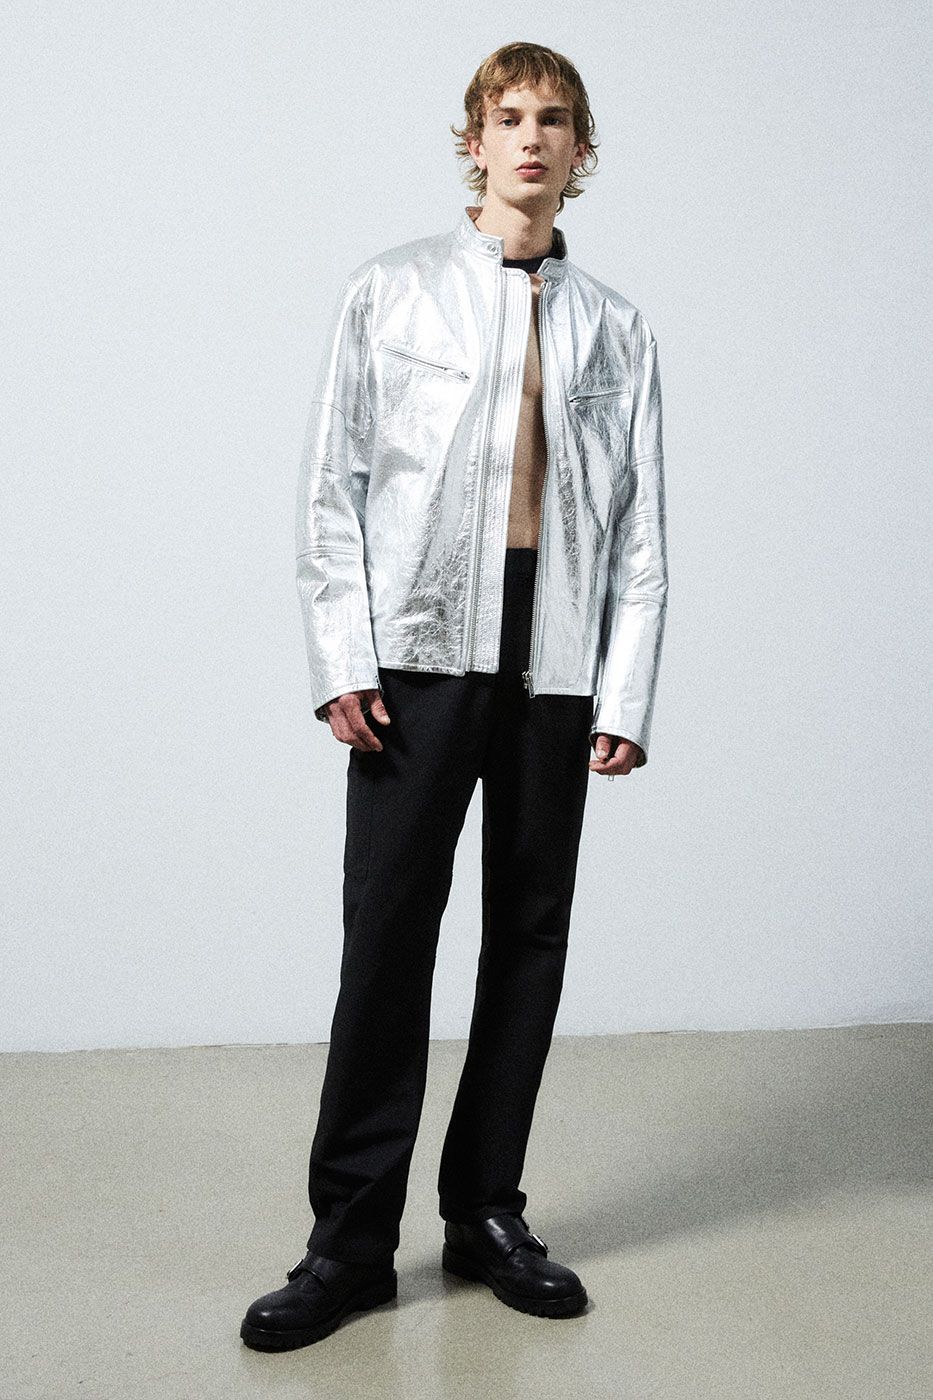 Helmut Lang revives a fashion classic - HIGHXTAR.